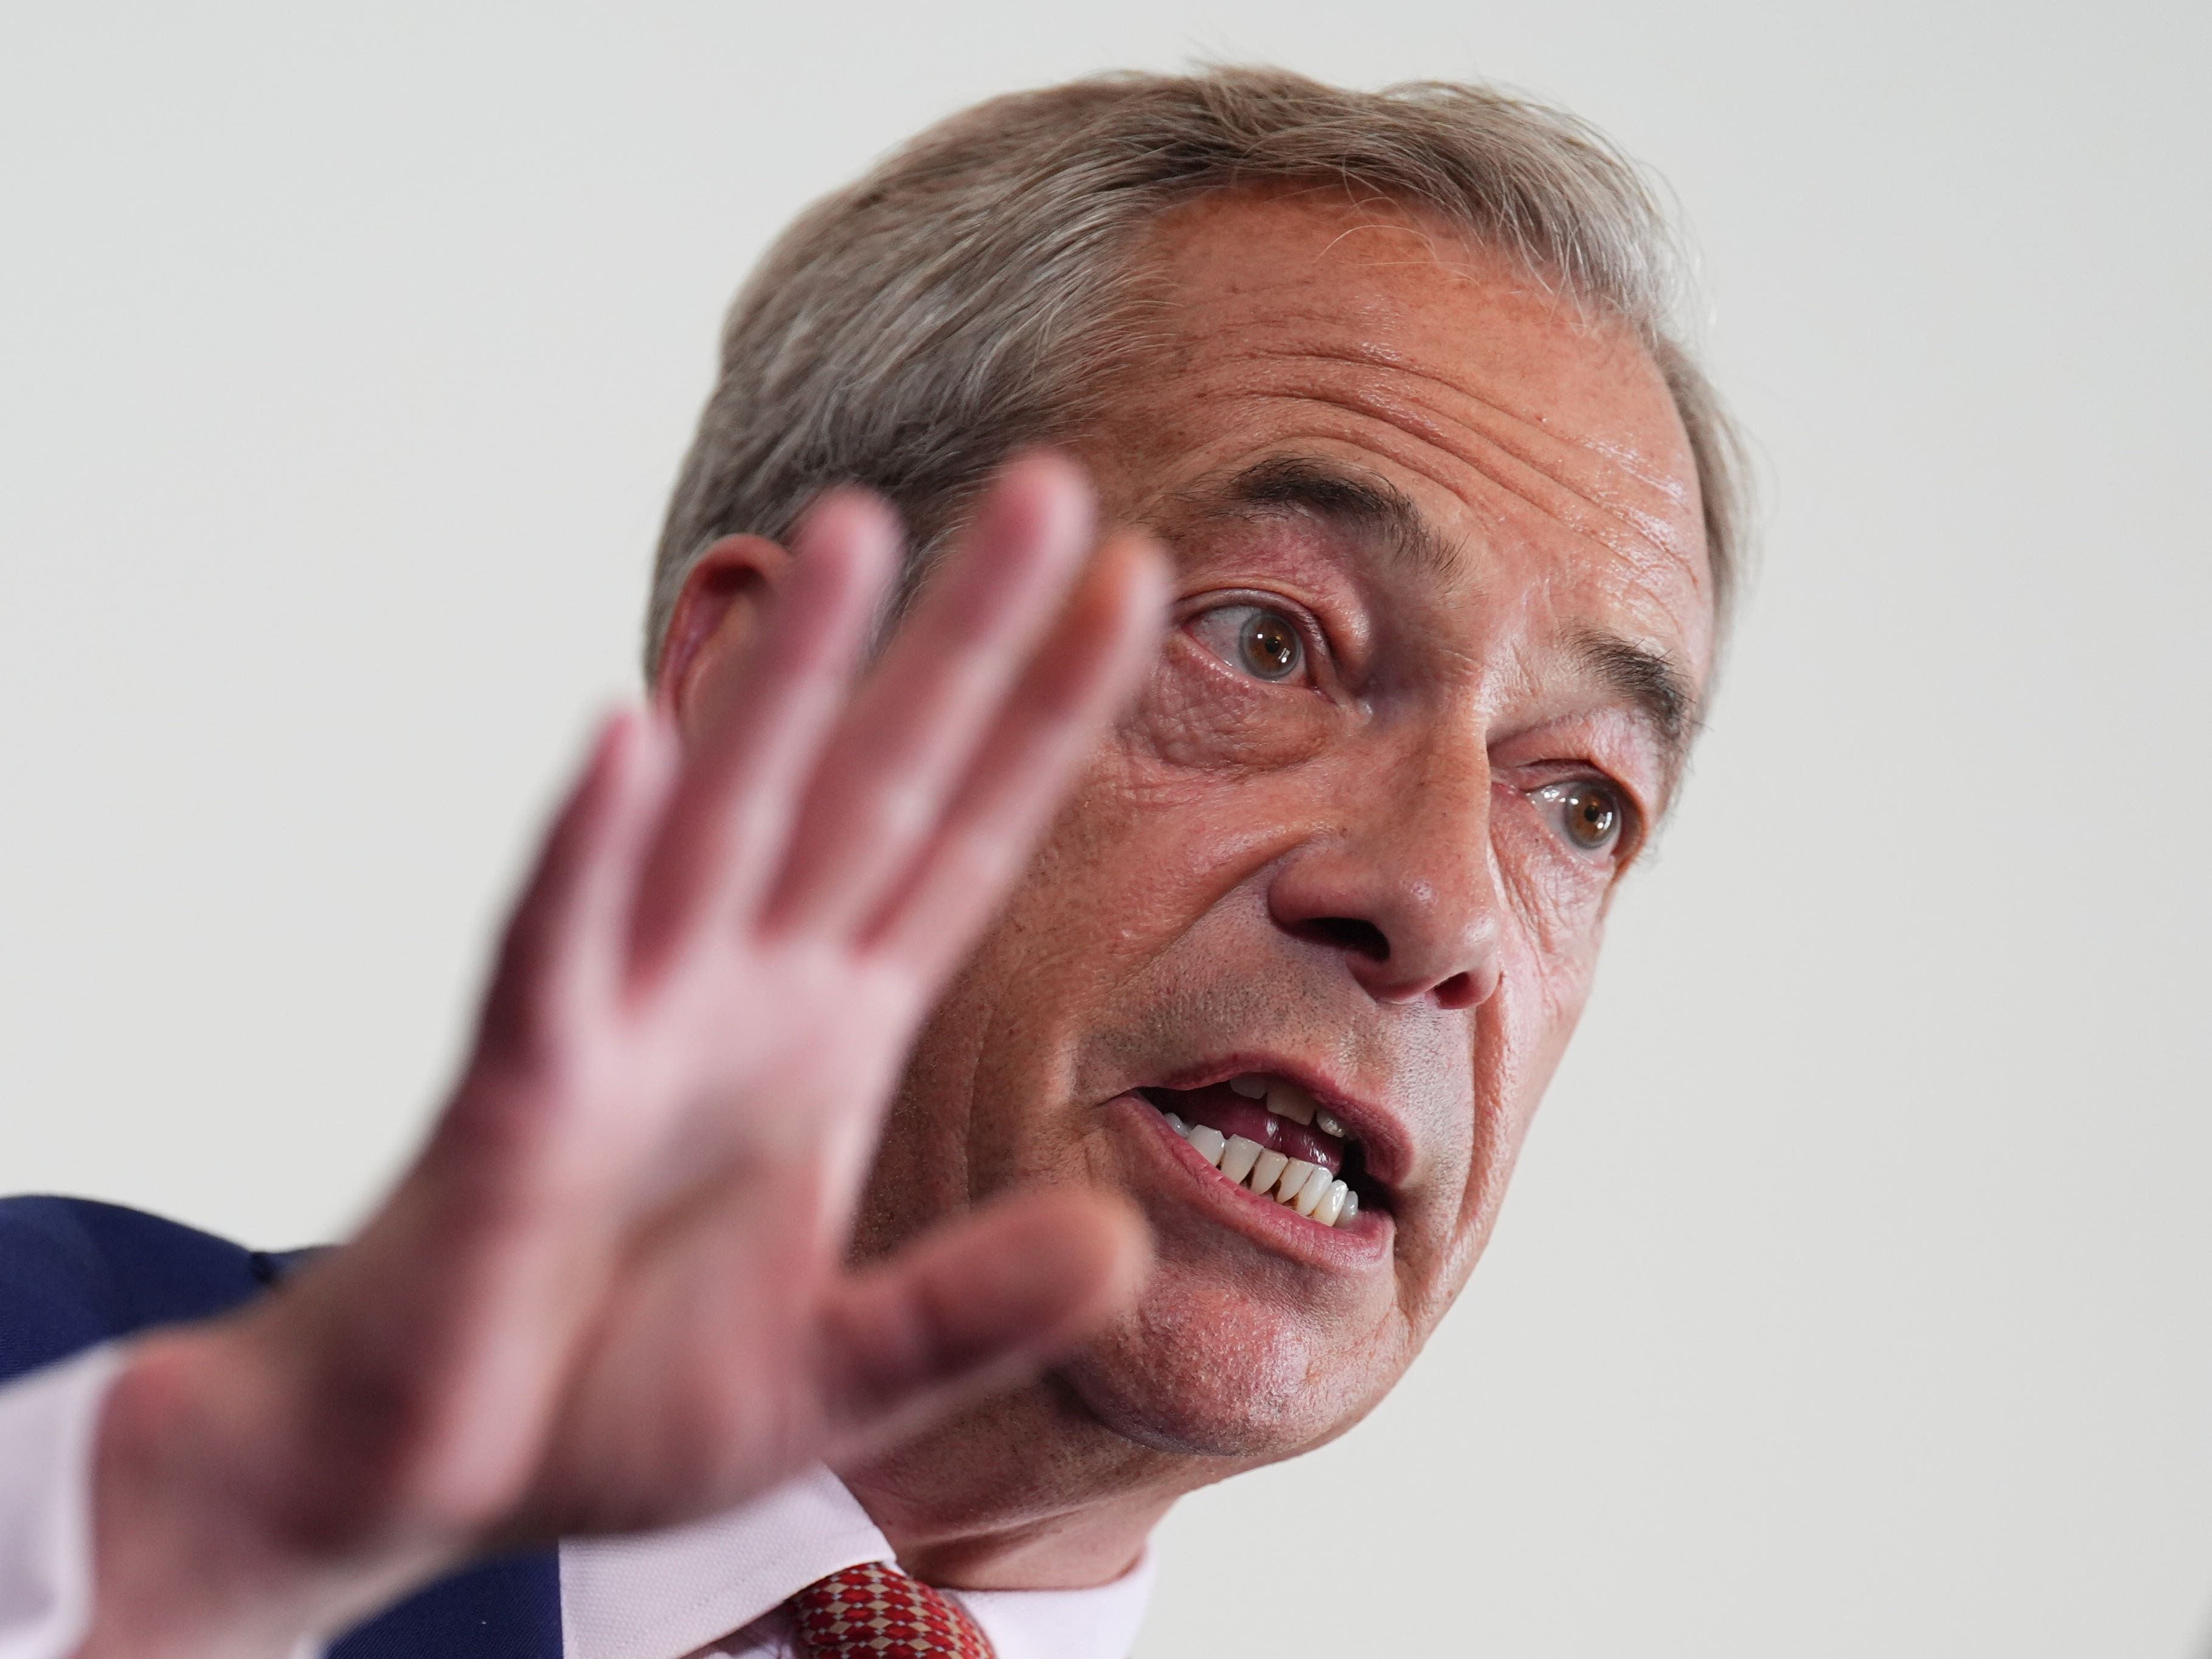 Profile: Who is Nigel Farage